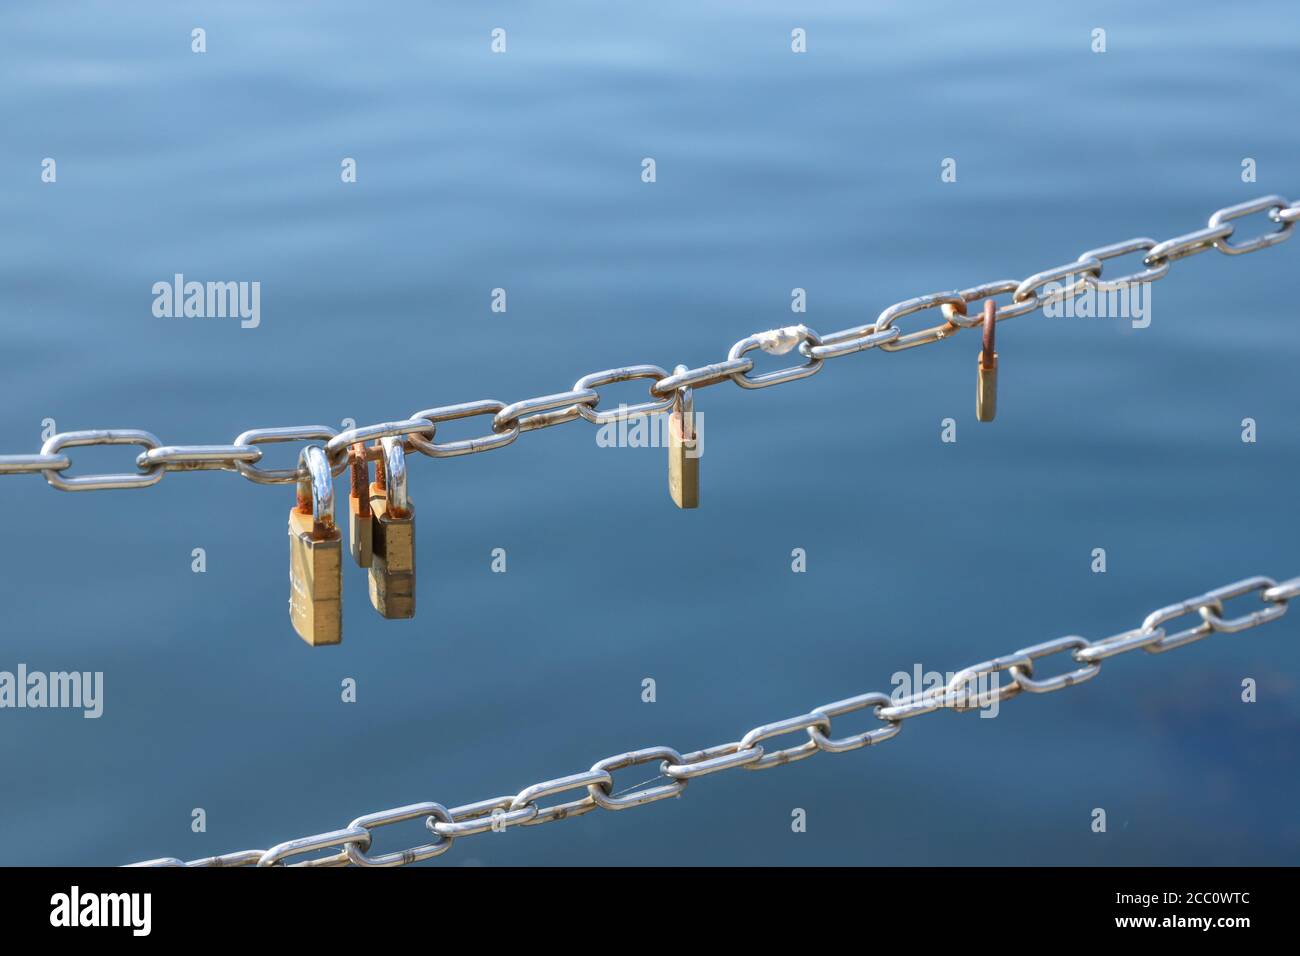 Love padlocks hanging on metal chain fence Stock Photo